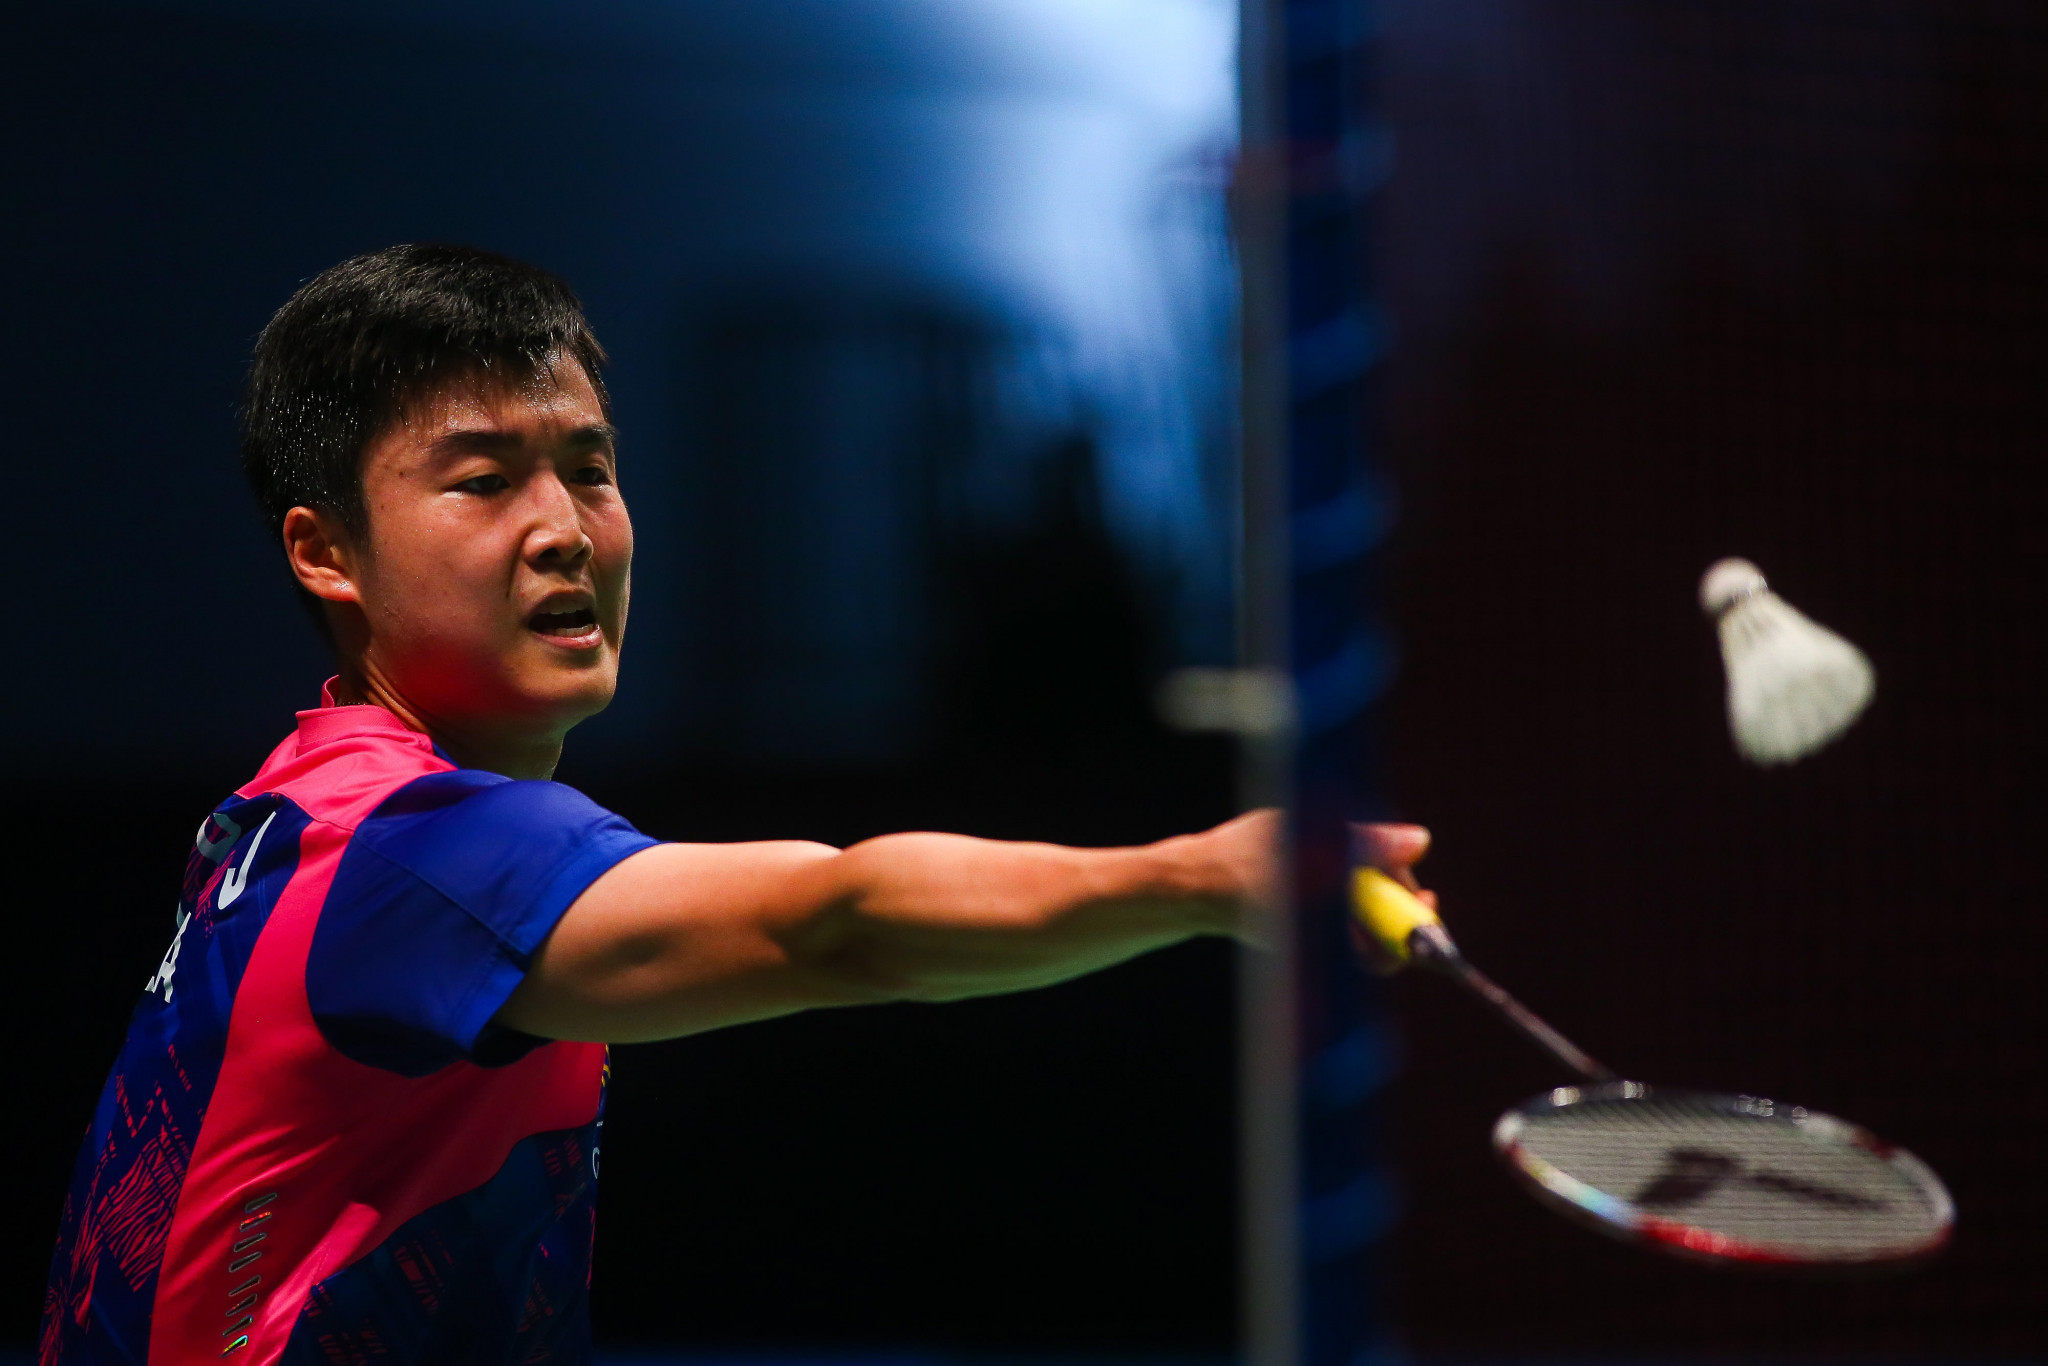 Jeon Hyeok Jin reached the men's singles final in Gwangju ©Getty Images